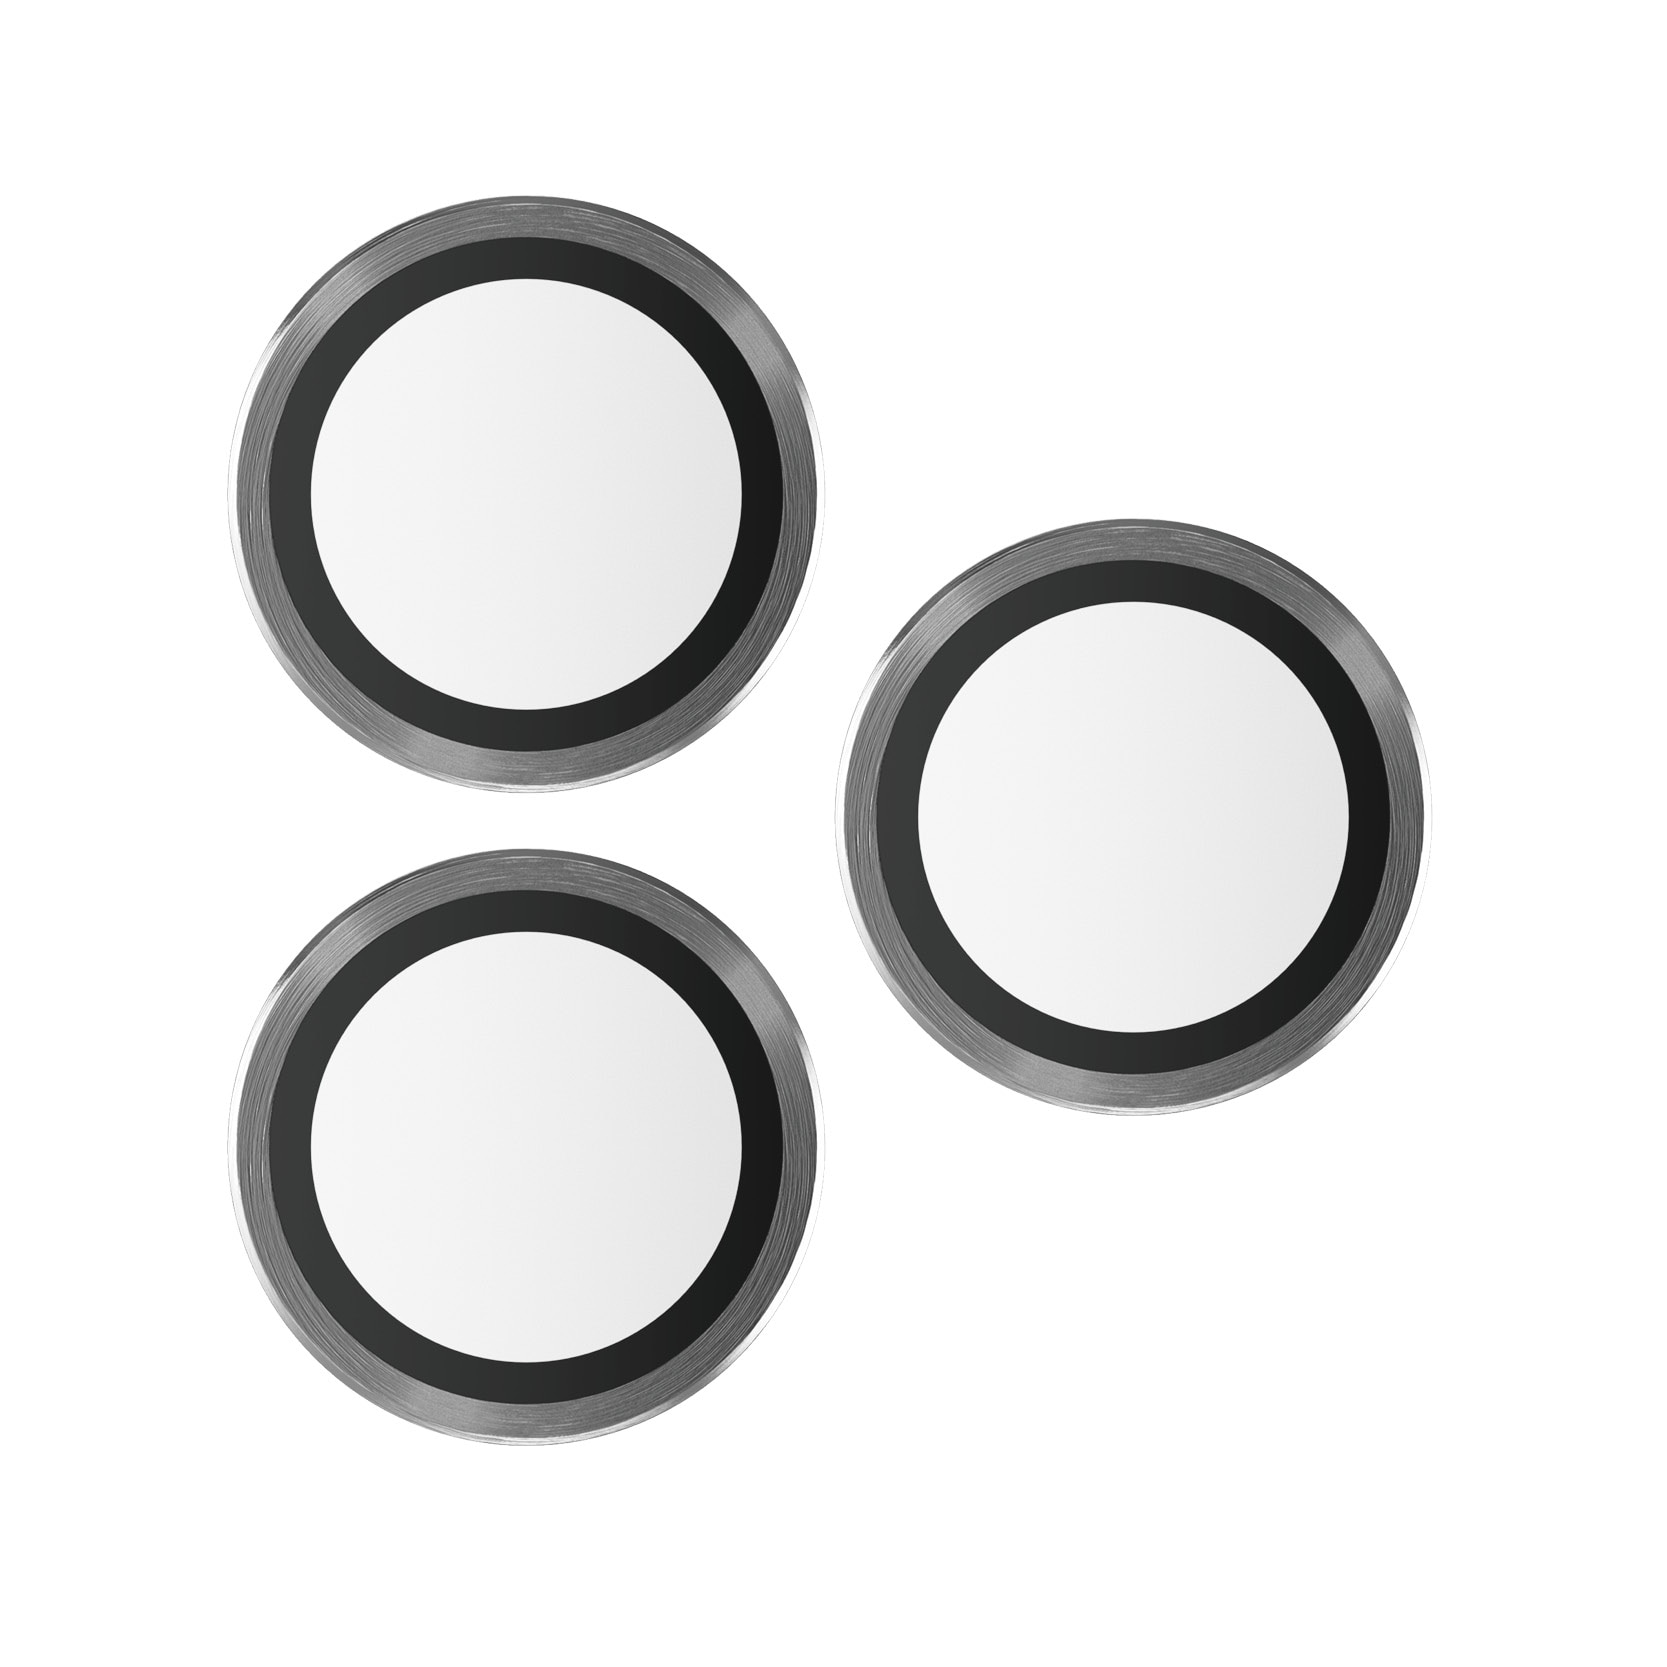 iPhone 15 Pro Max Hoops Camera Lens Protector, Black